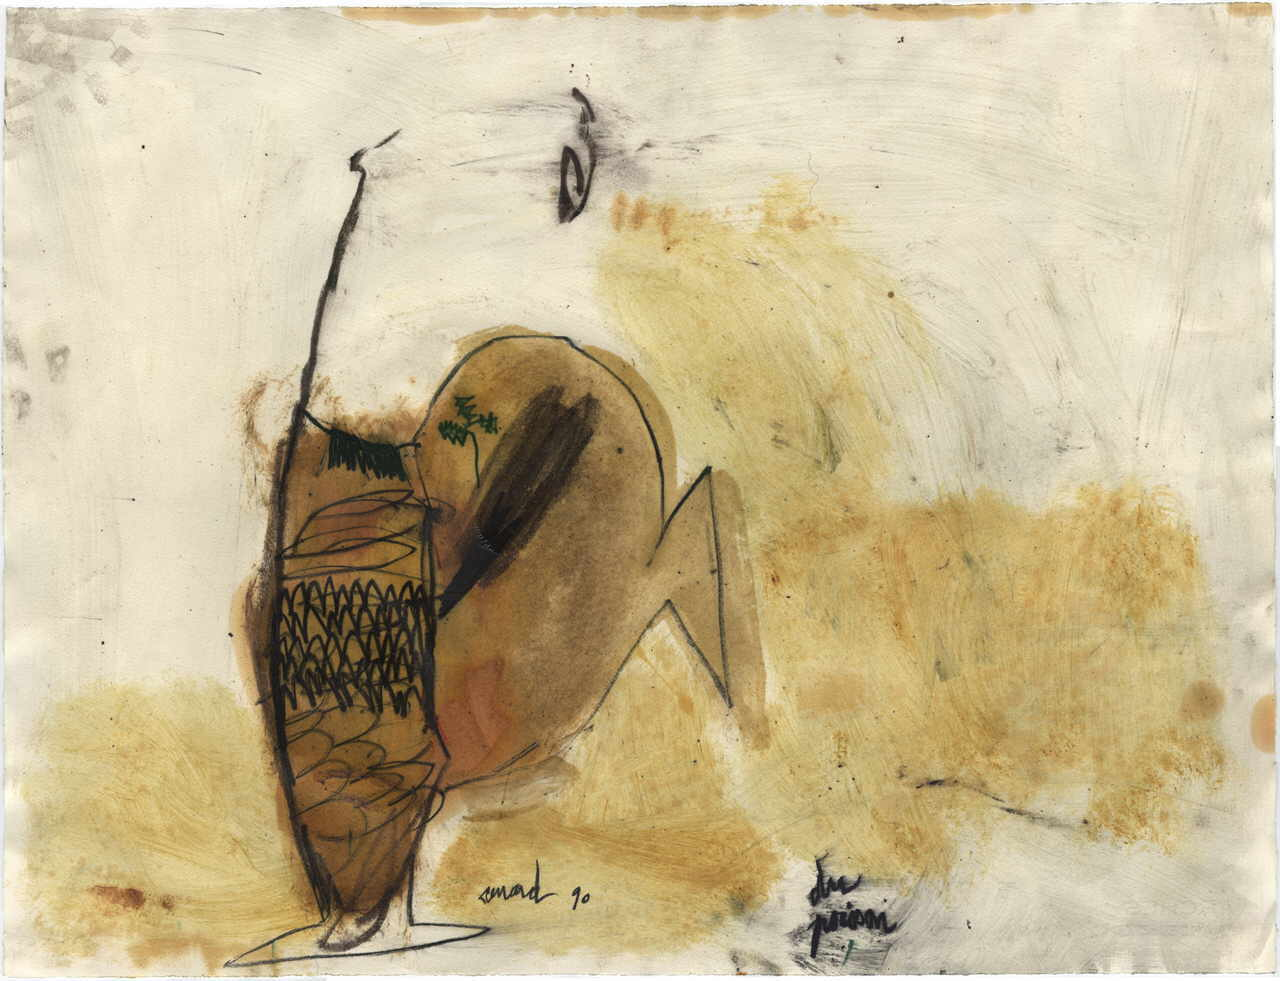 Renard Emmanuelle 
"du poison", 1990
mixed media / paper
49 x 65 cm